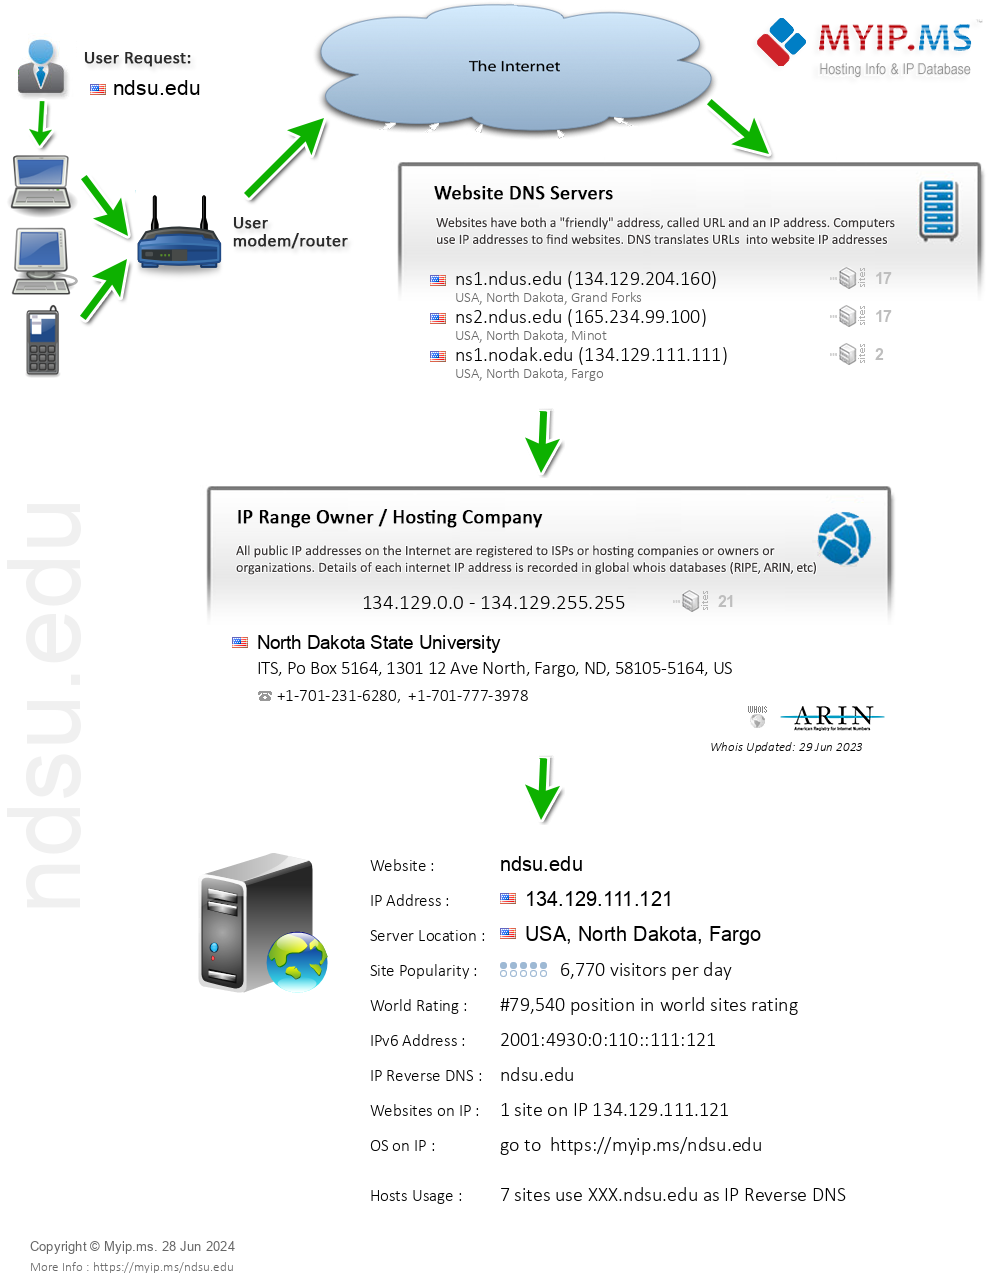 Ndsu.edu - Website Hosting Visual IP Diagram